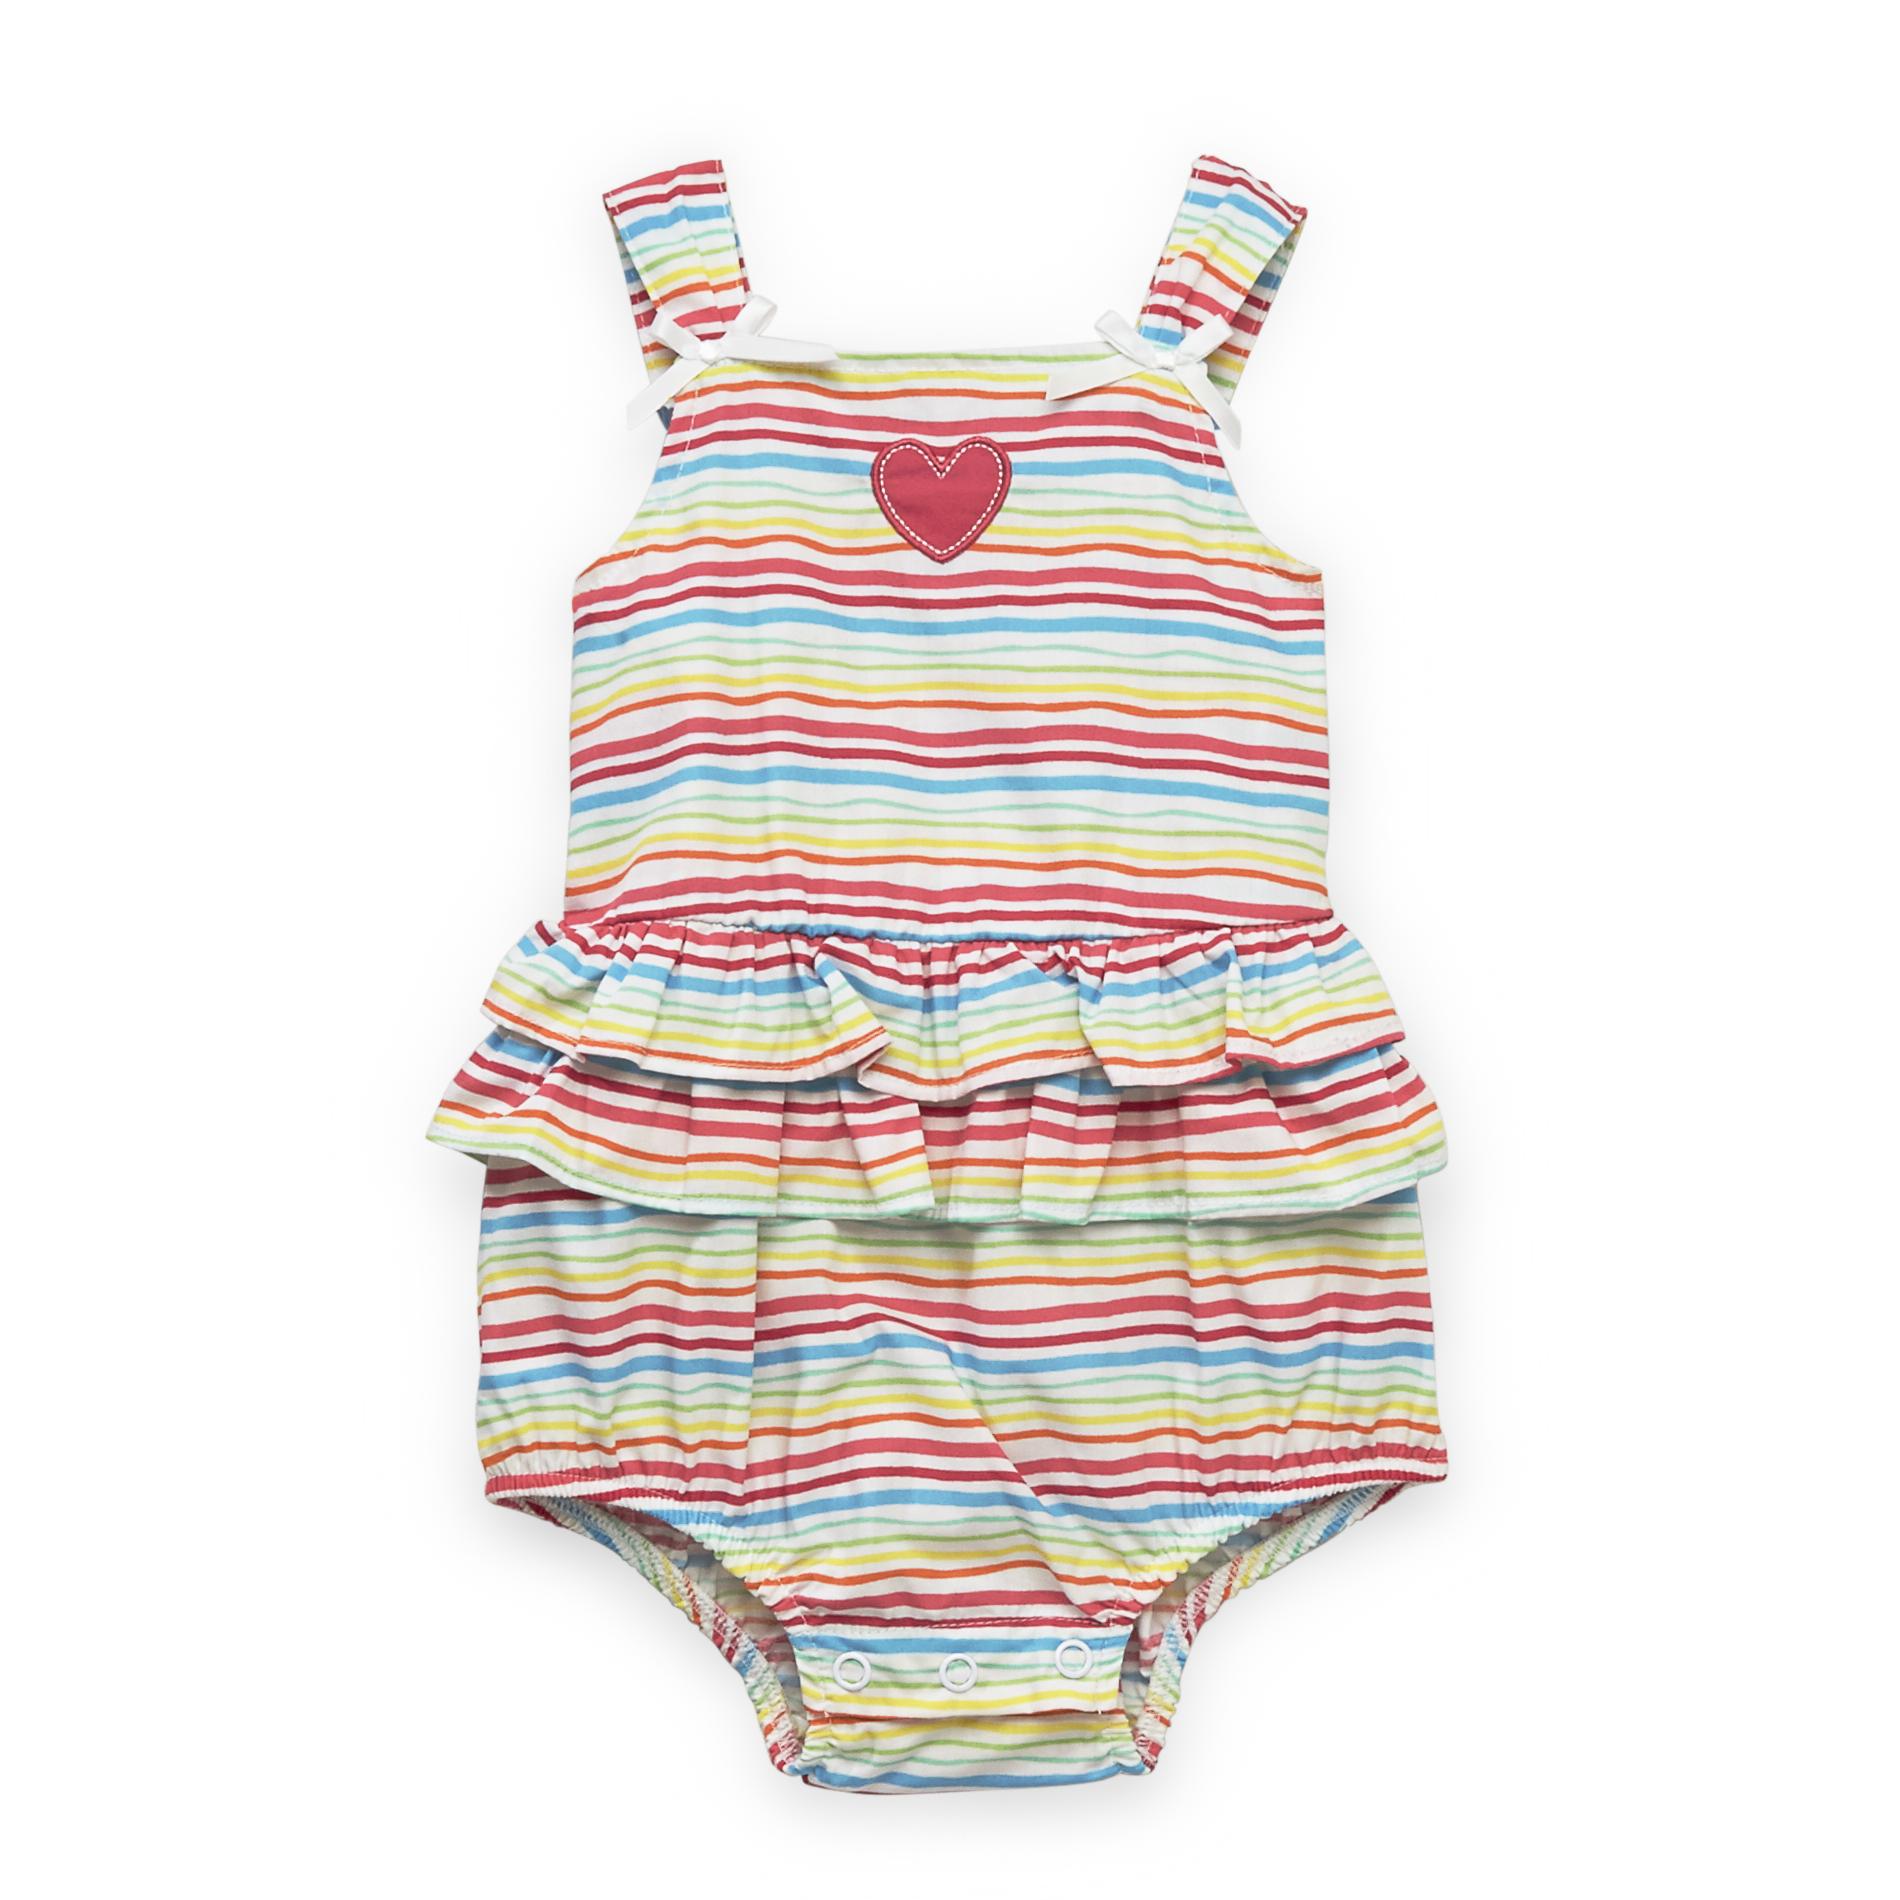 Small Wonders Newborn Girl's Ruffle Tiered Bodysuit - Heart & Striped